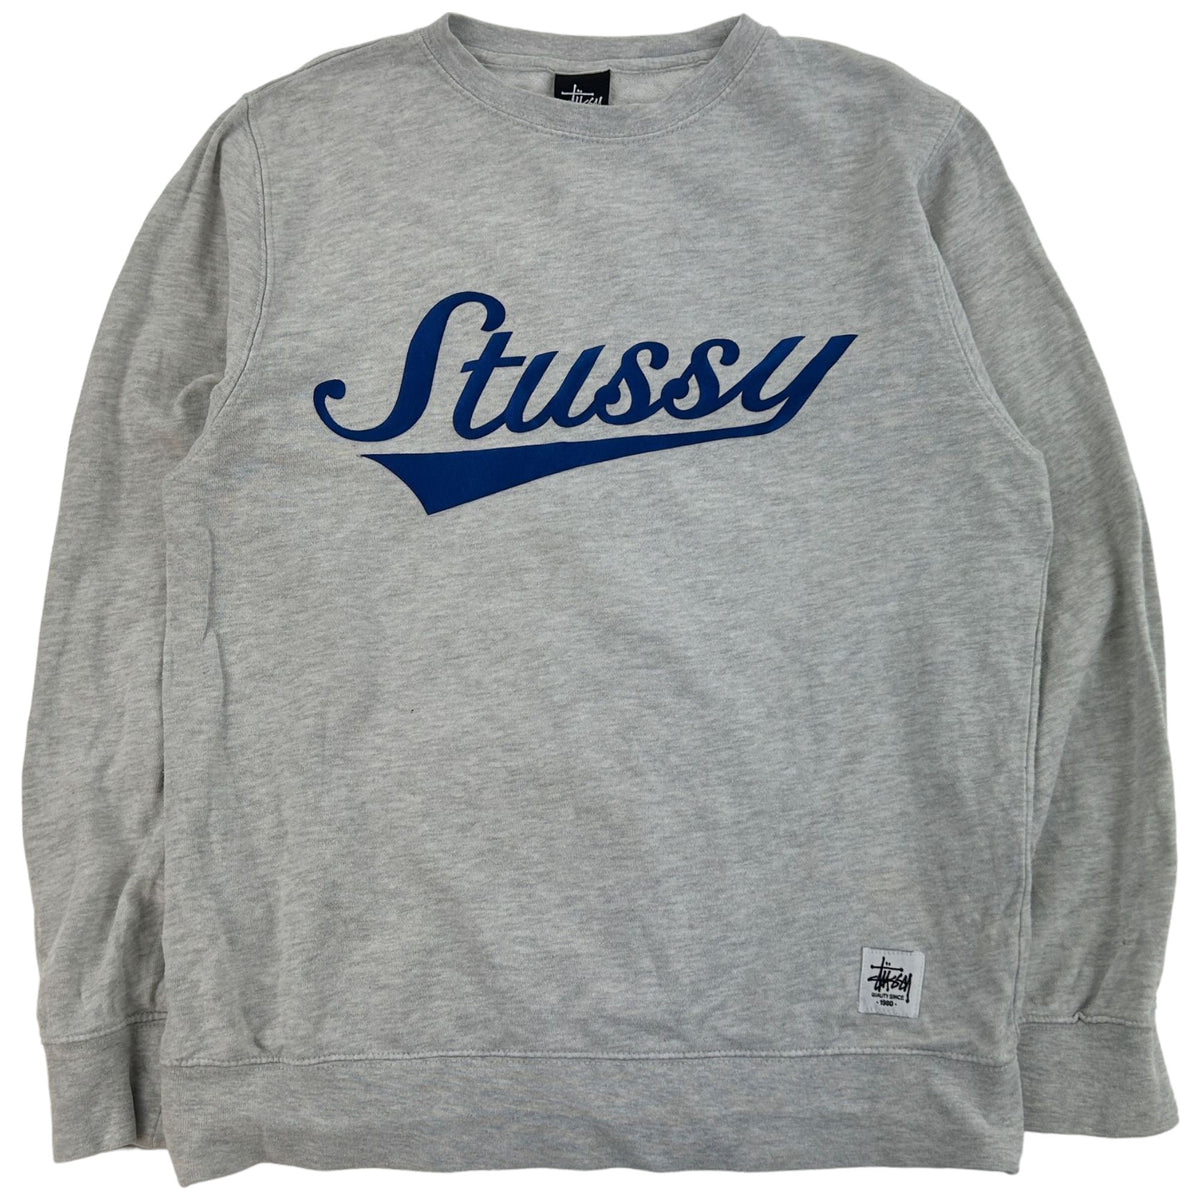 Stussy Crewneck Sweatshirt Size S